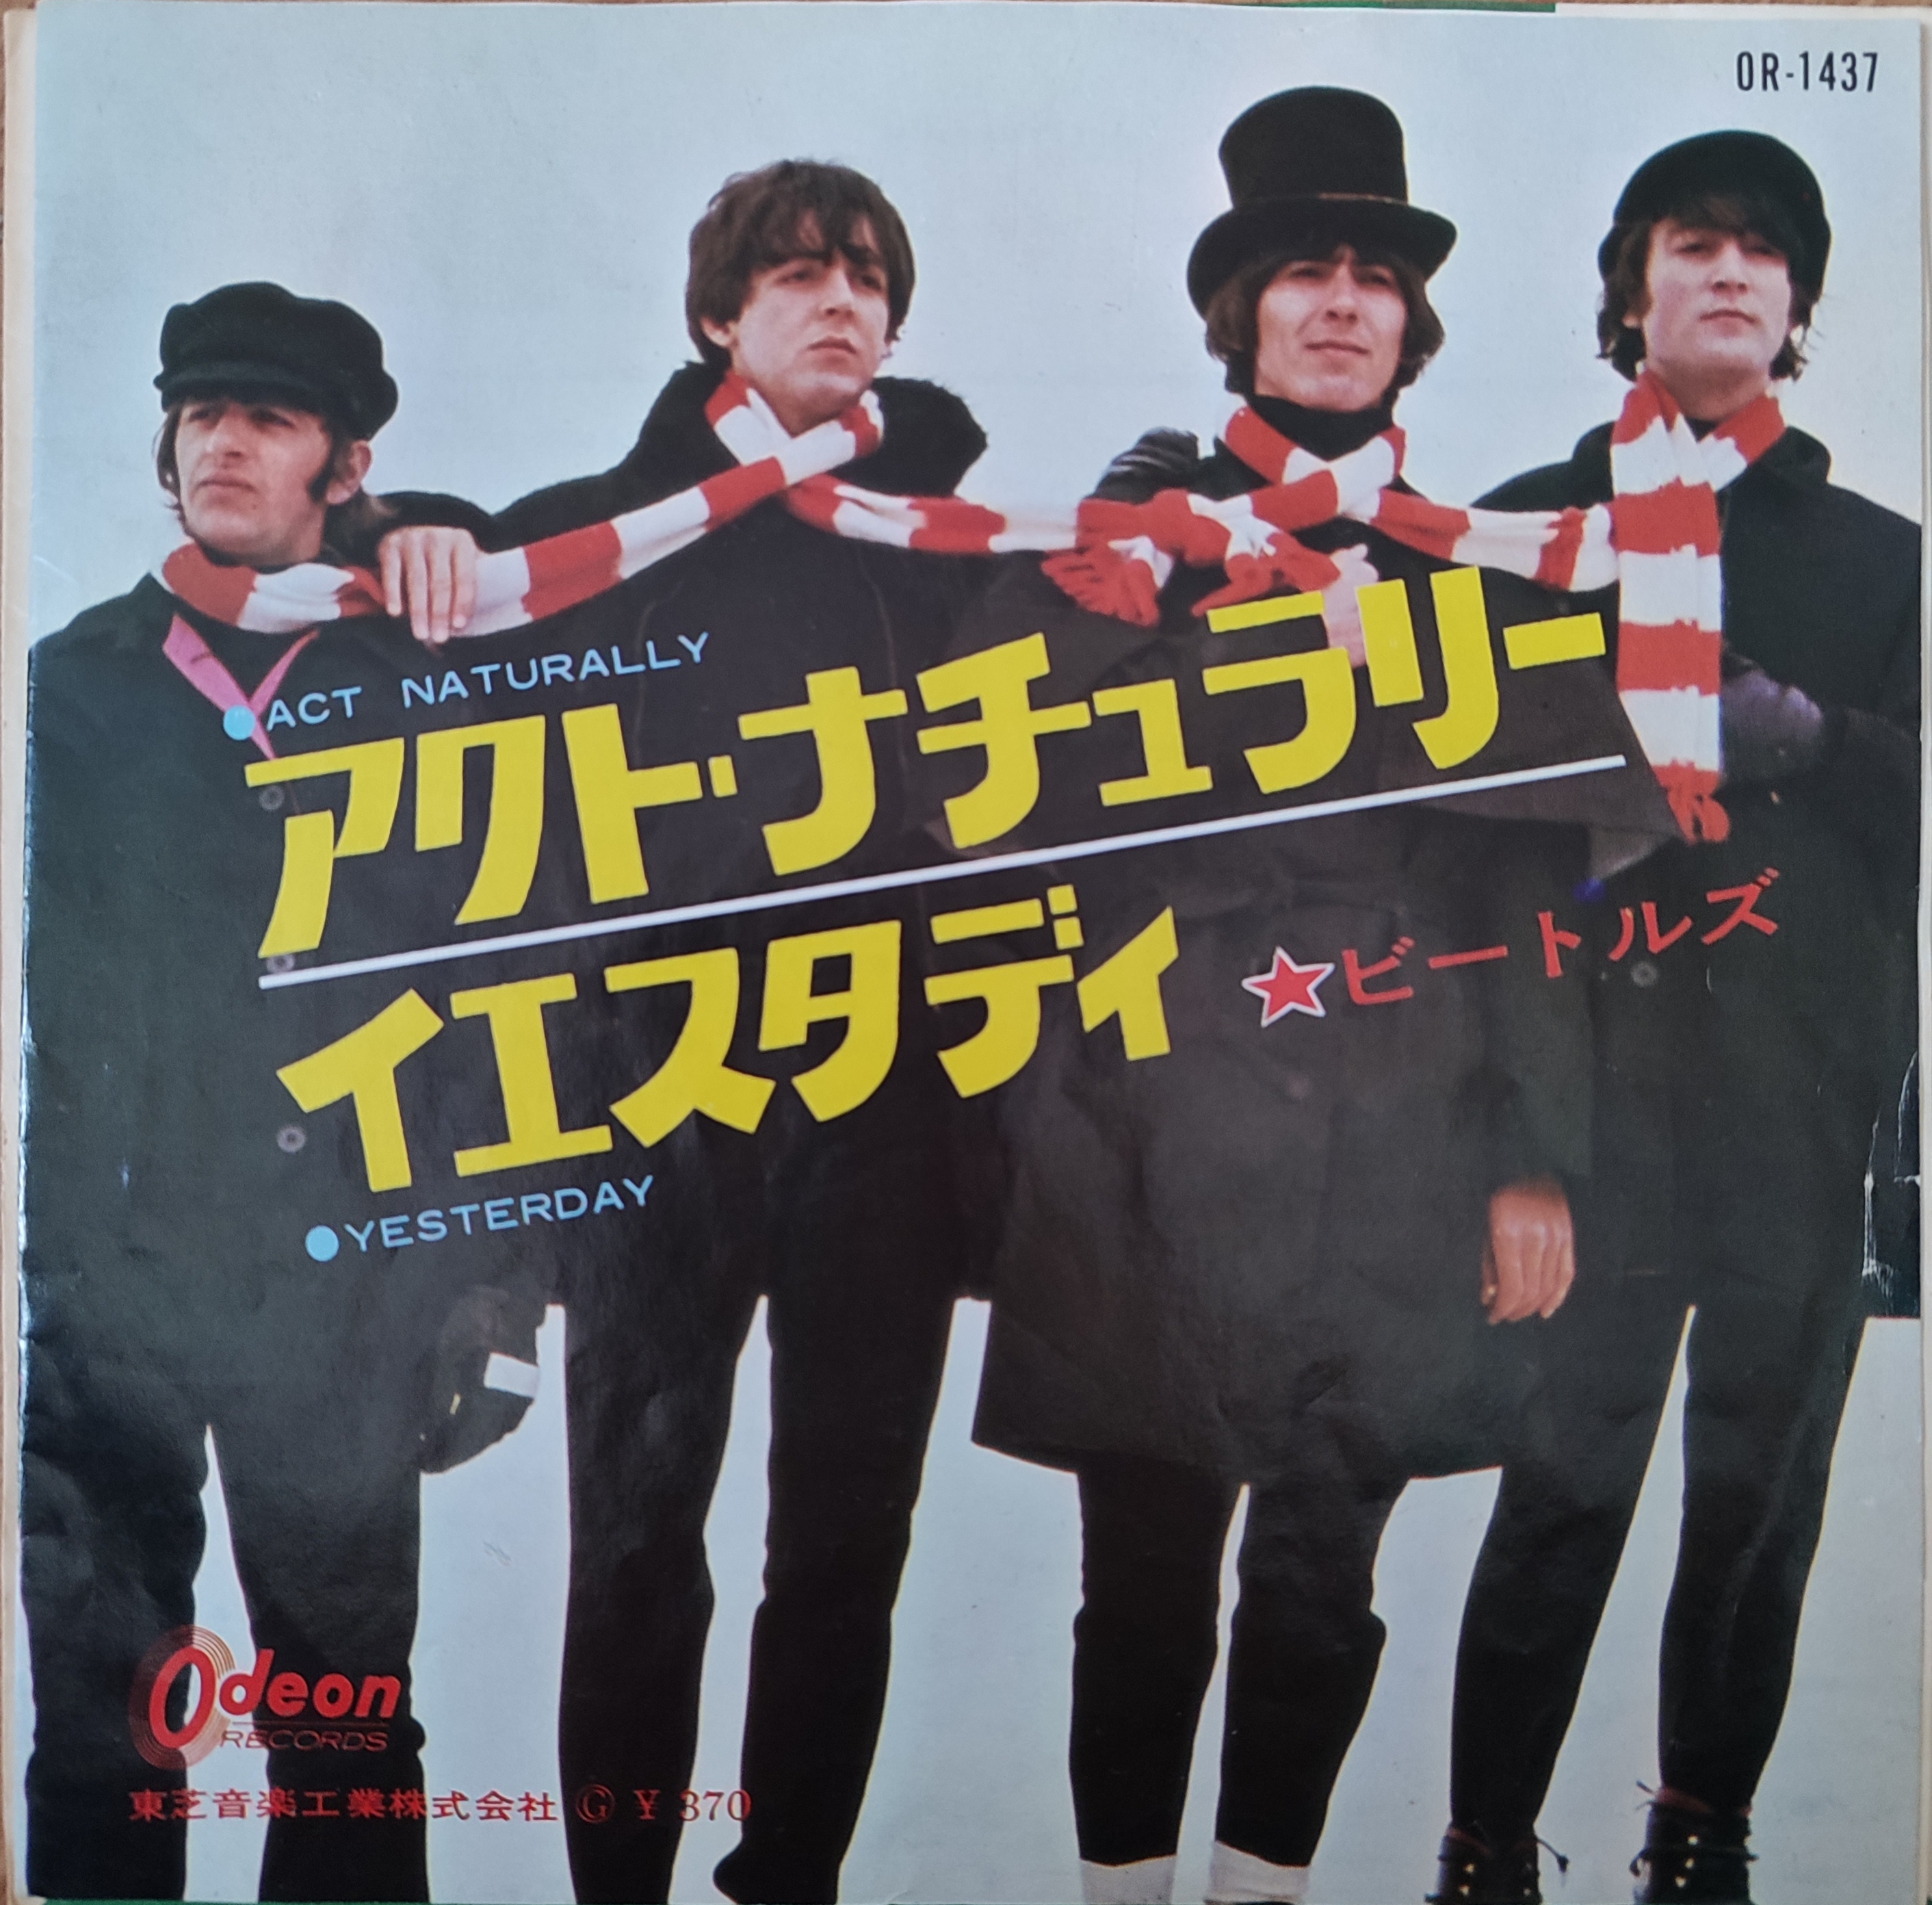 THE BEATLES - YESTERDAY / Act  Naturally  - Japonya 1971 Basım 45lik Plak (Odeon ) 2. EL